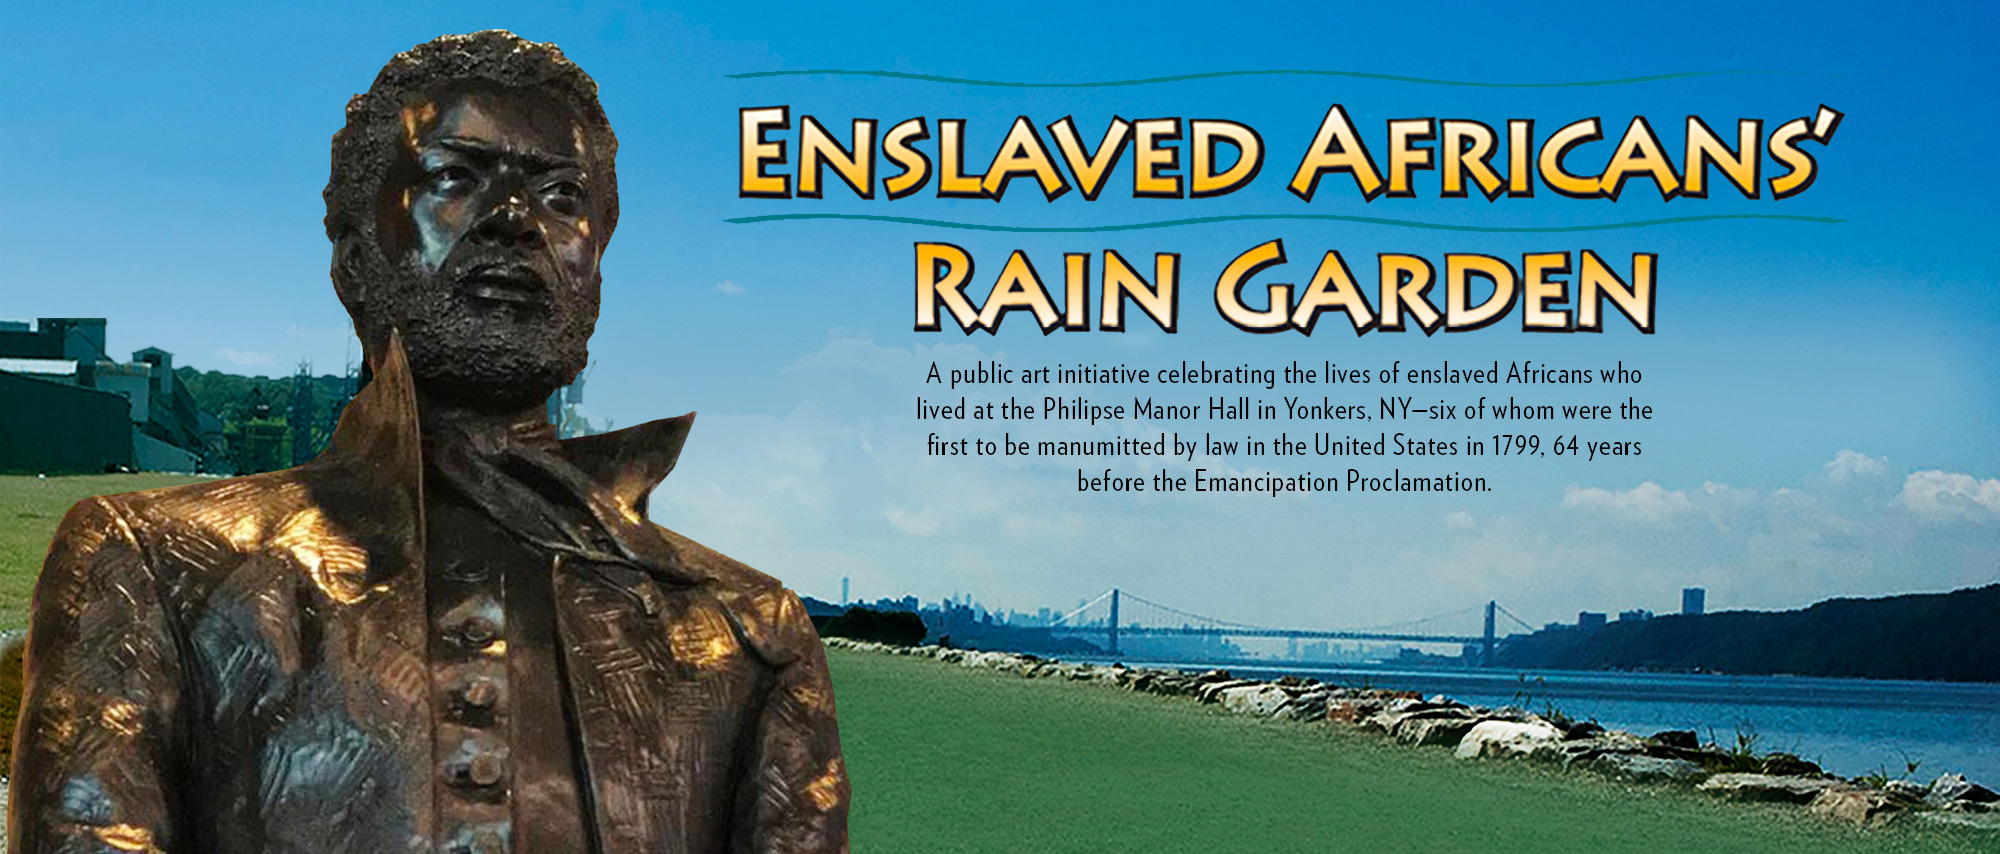 Enslaved Africans Rain Garden. Torso of a bronze figure against  a blue sky